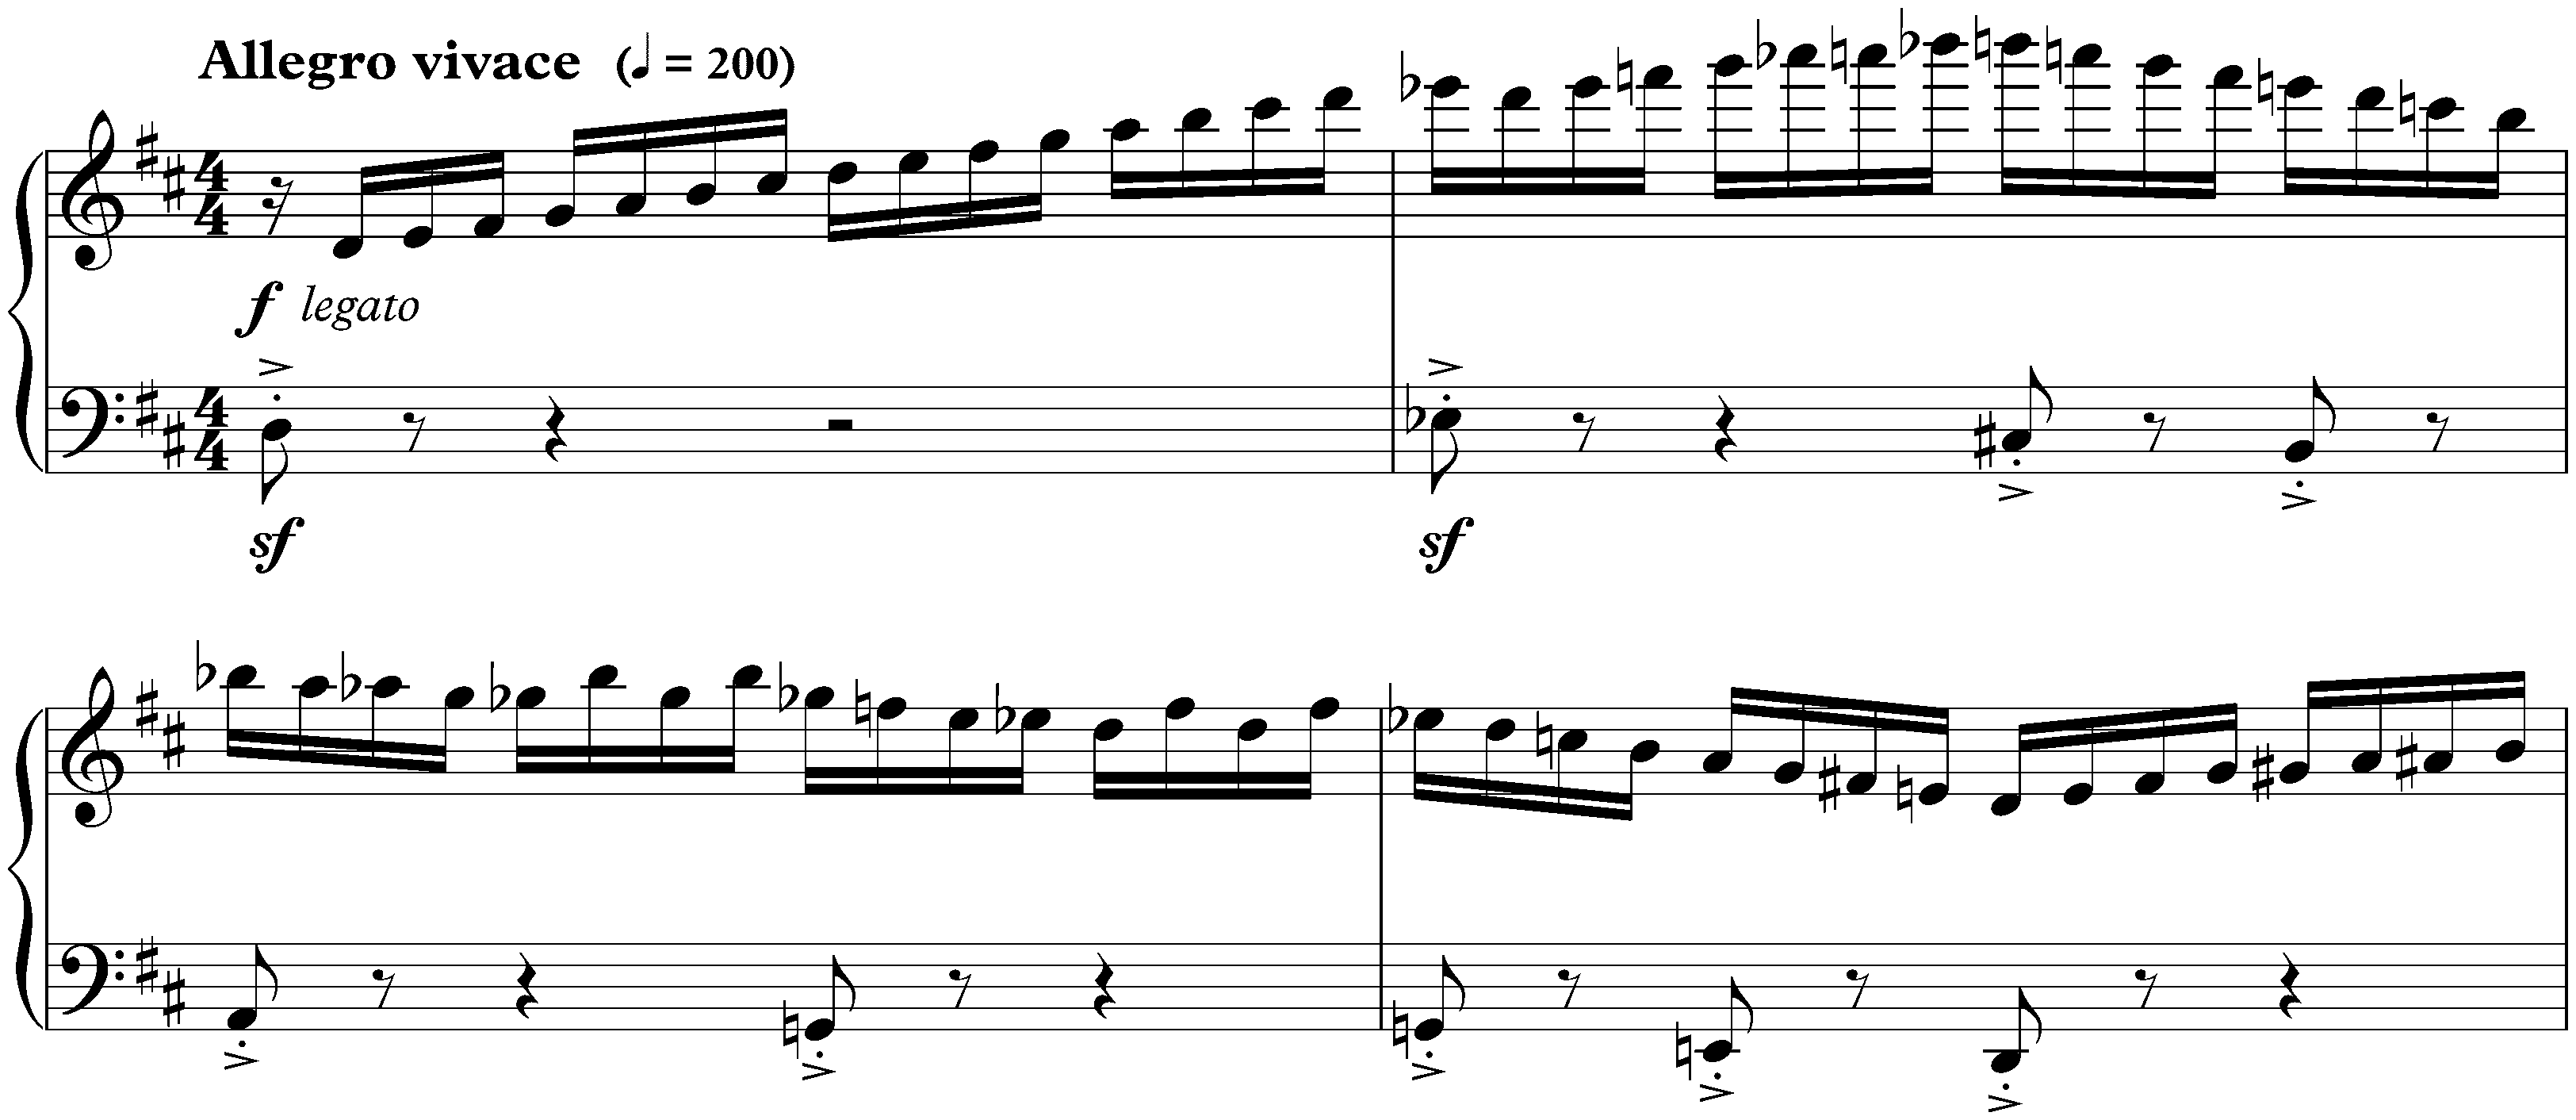 Twenty-four Preludes, op. 34; 5. D major